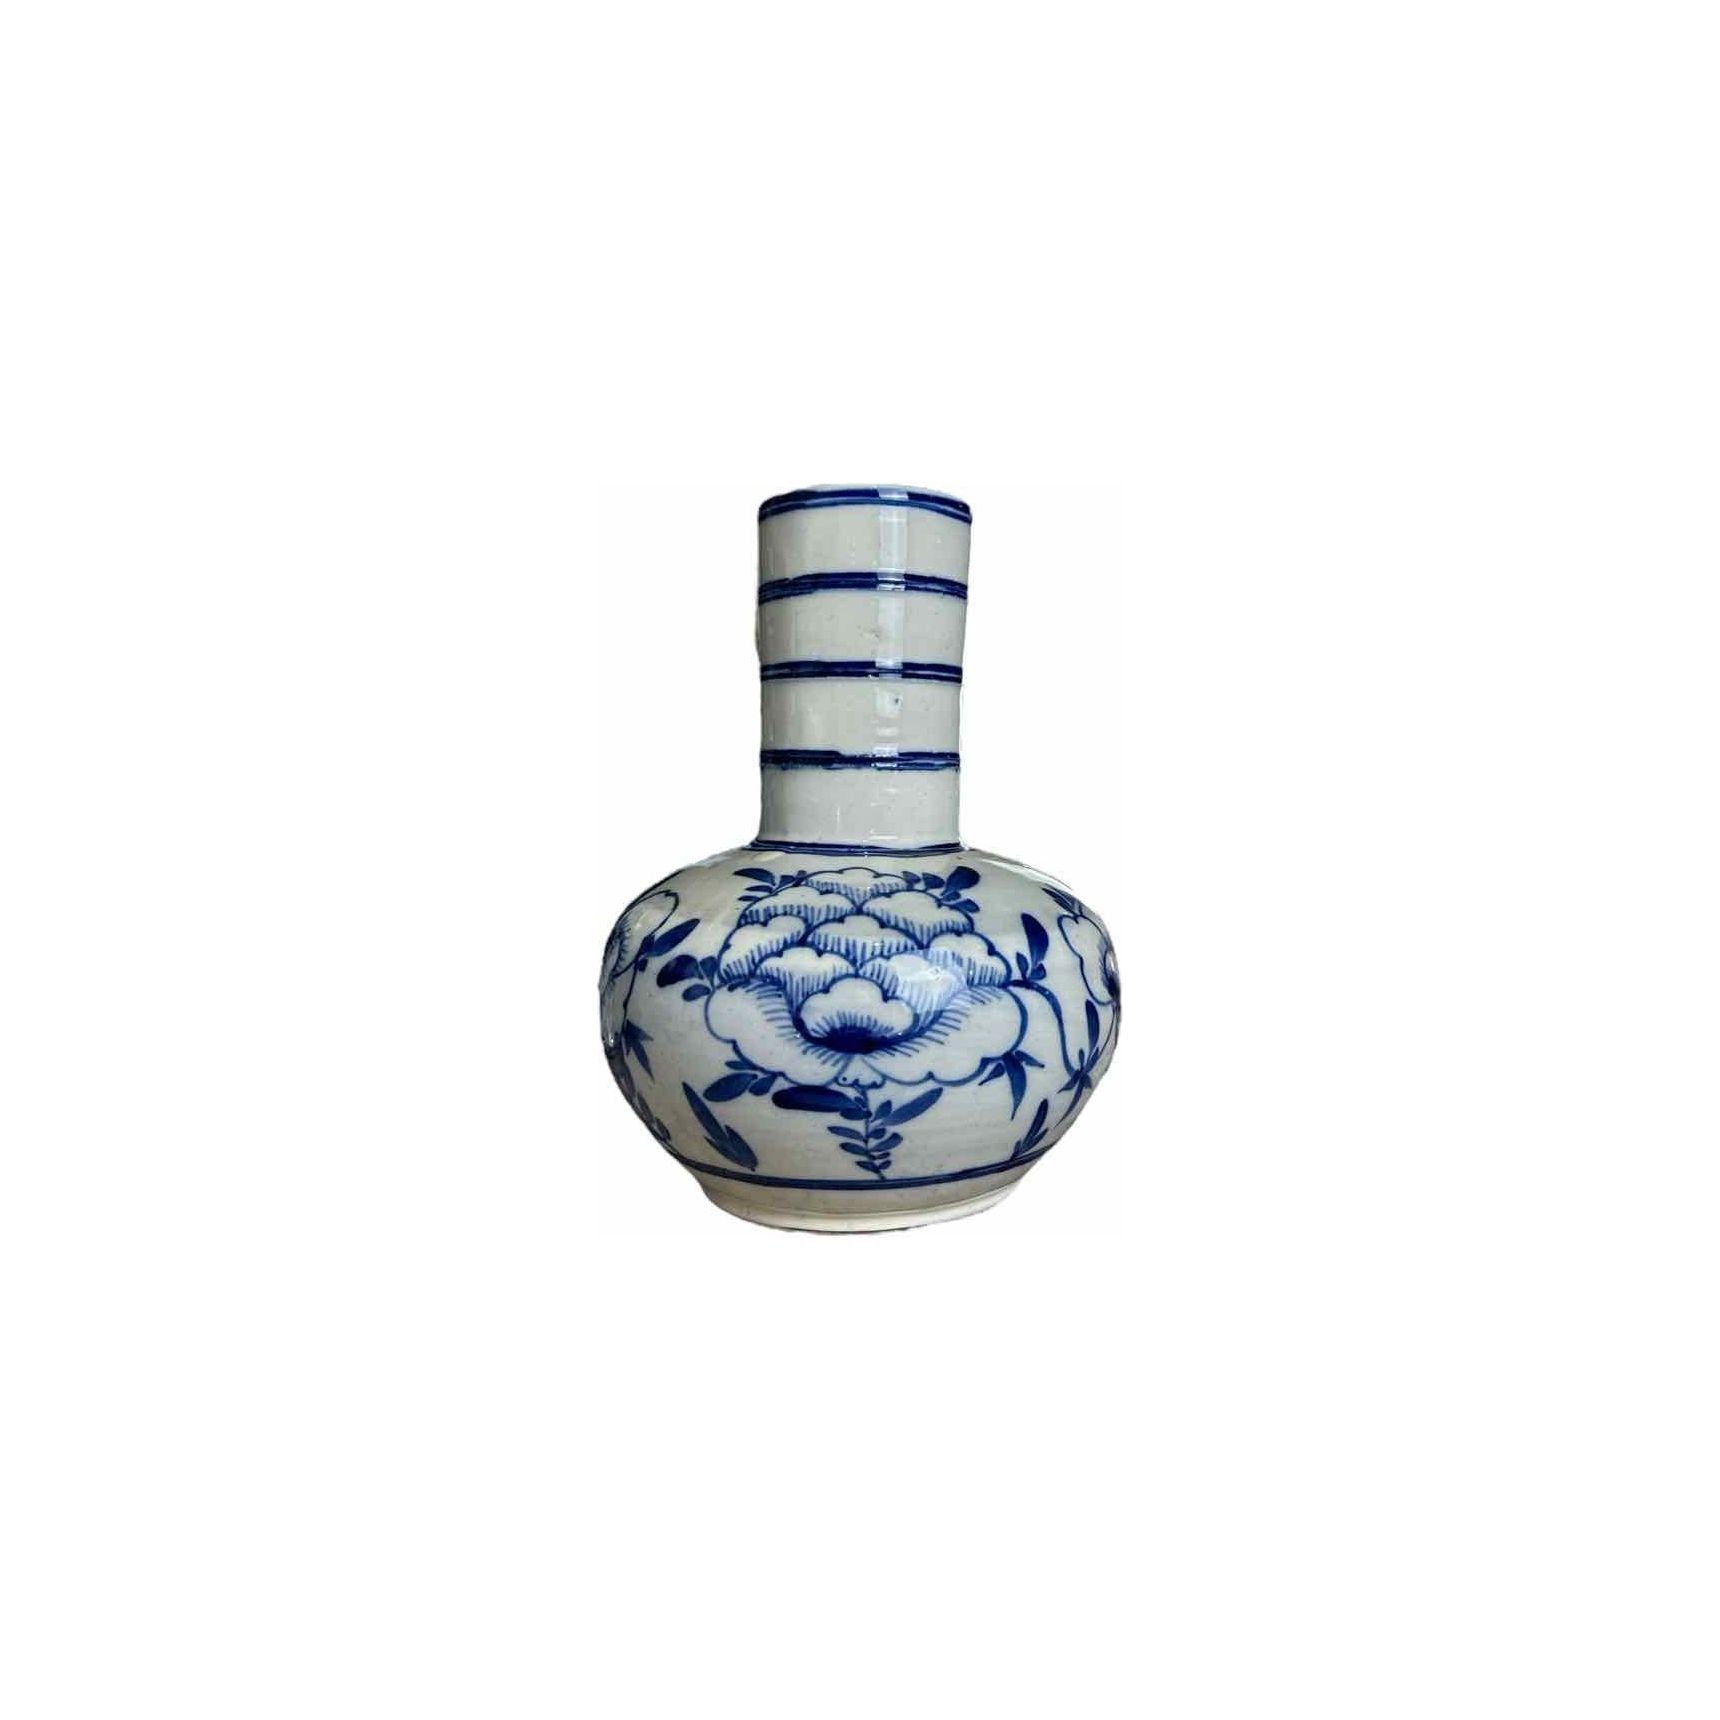 Pair of Ceramic Asian Vases w/ Floral Motif in Blue